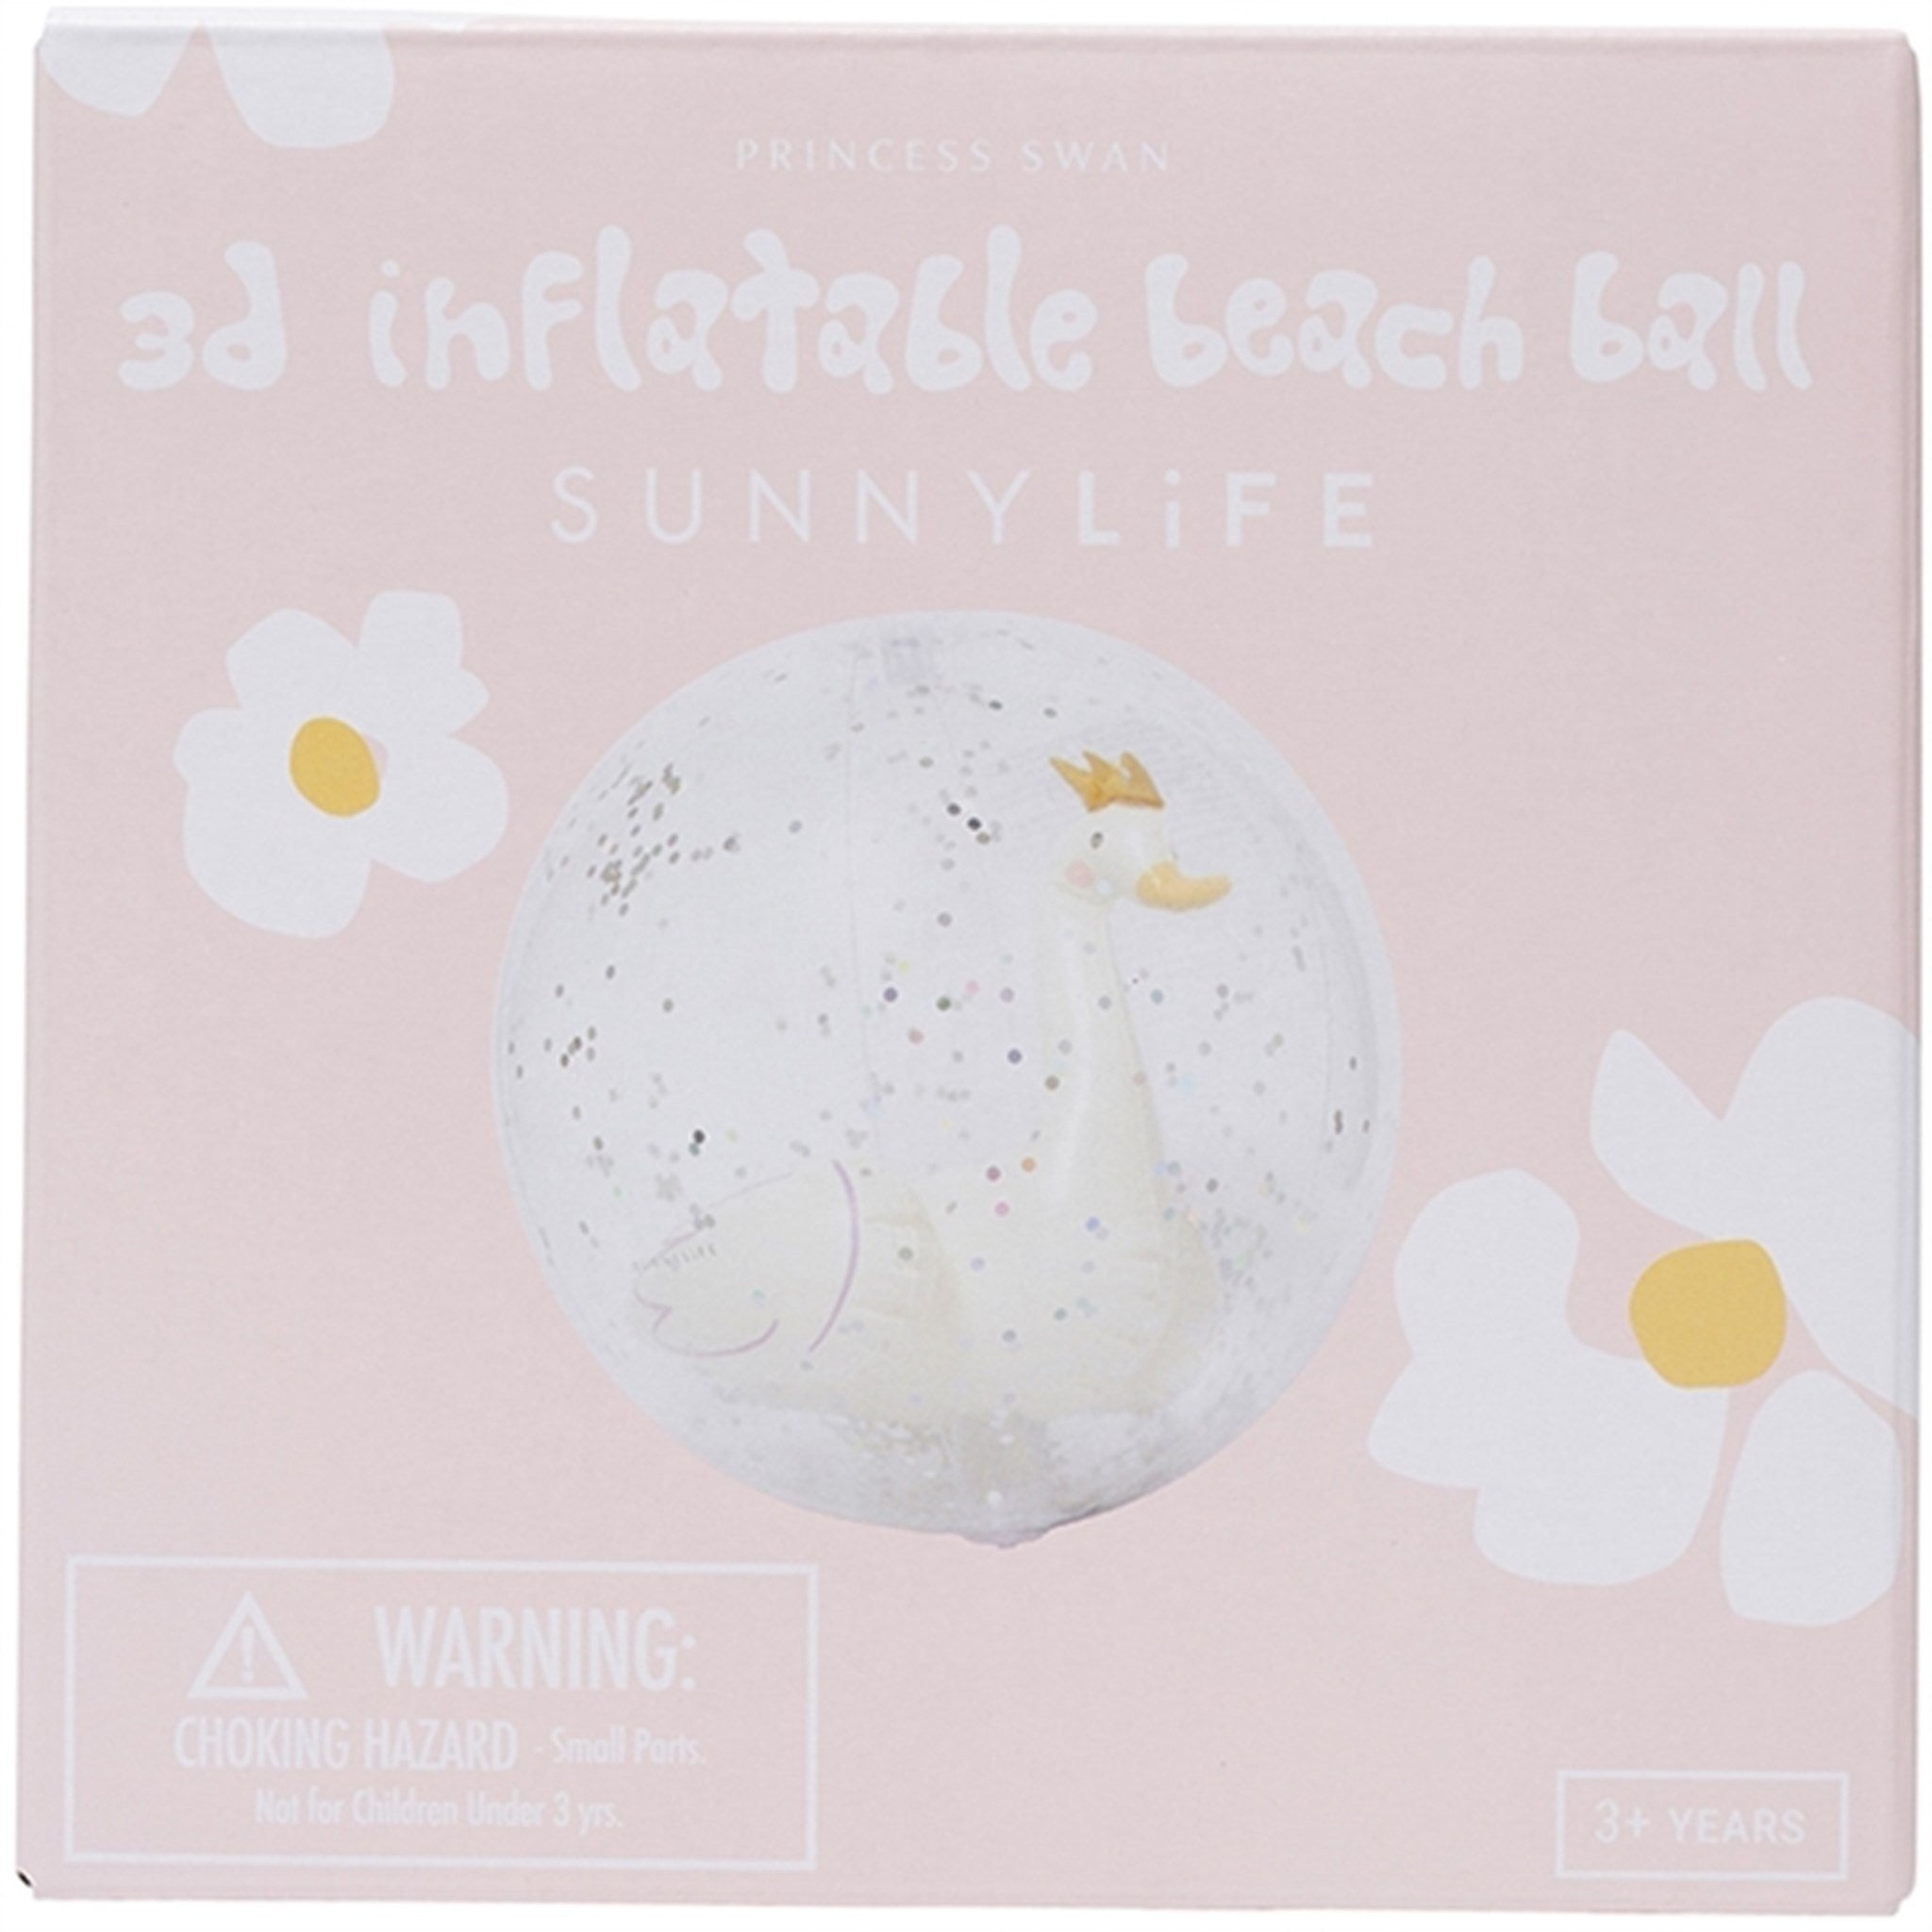 SunnyLife 3D Beach Ball Princess Swan Multi 5